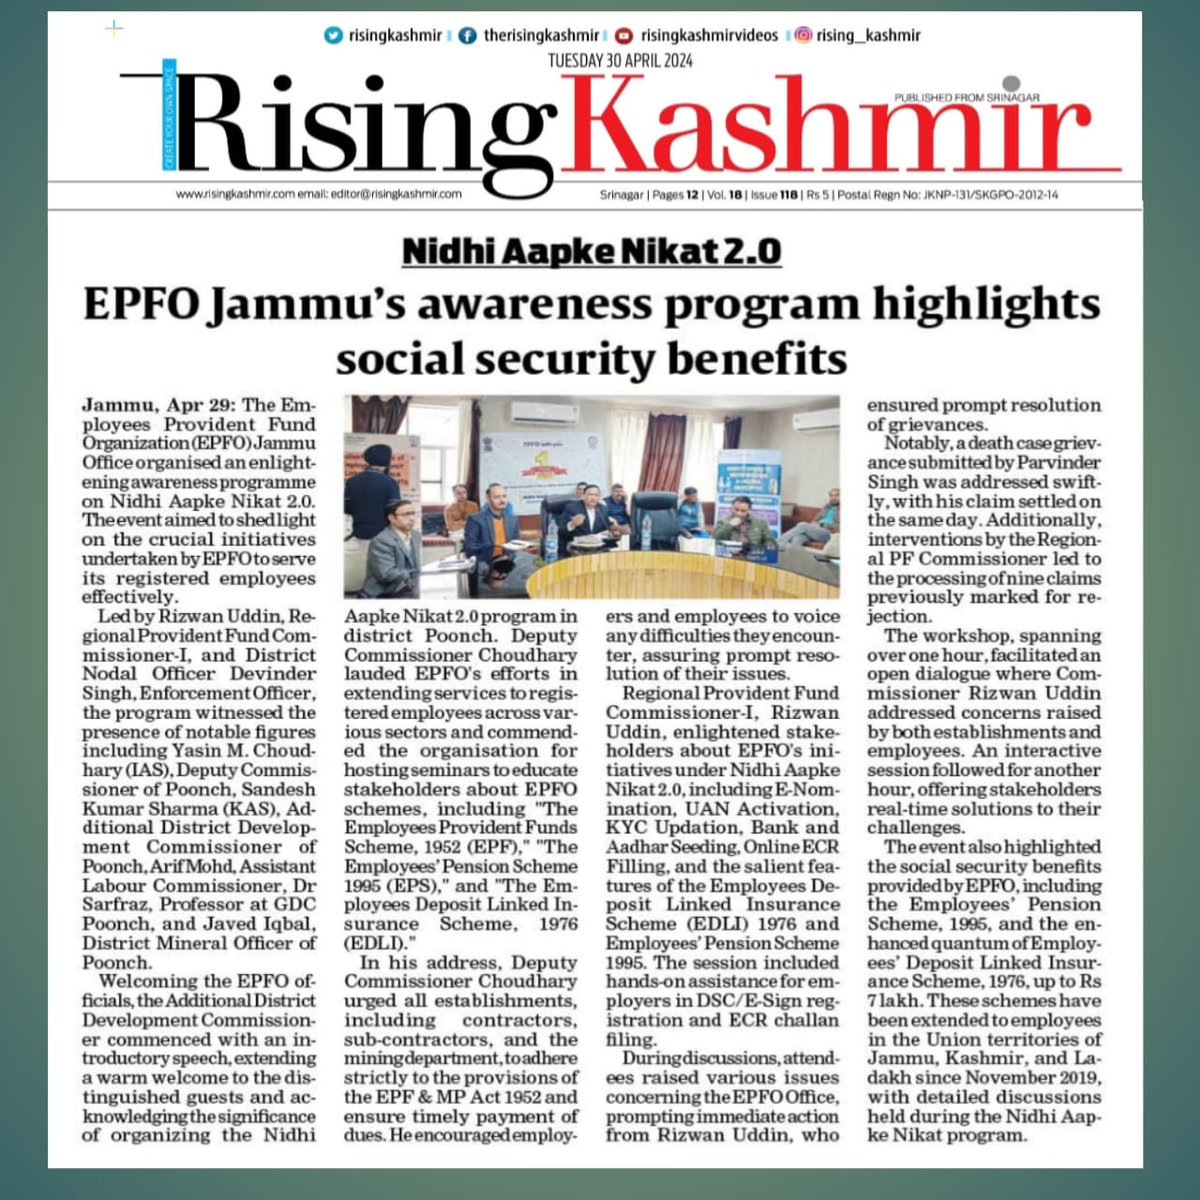 NIDHI APKE NIKAT PROGRAM 2.0 conducted by EPFO, Jammu at Conference Hall, Dak Bungalow, Poonch. Thanks @RisingKashmir